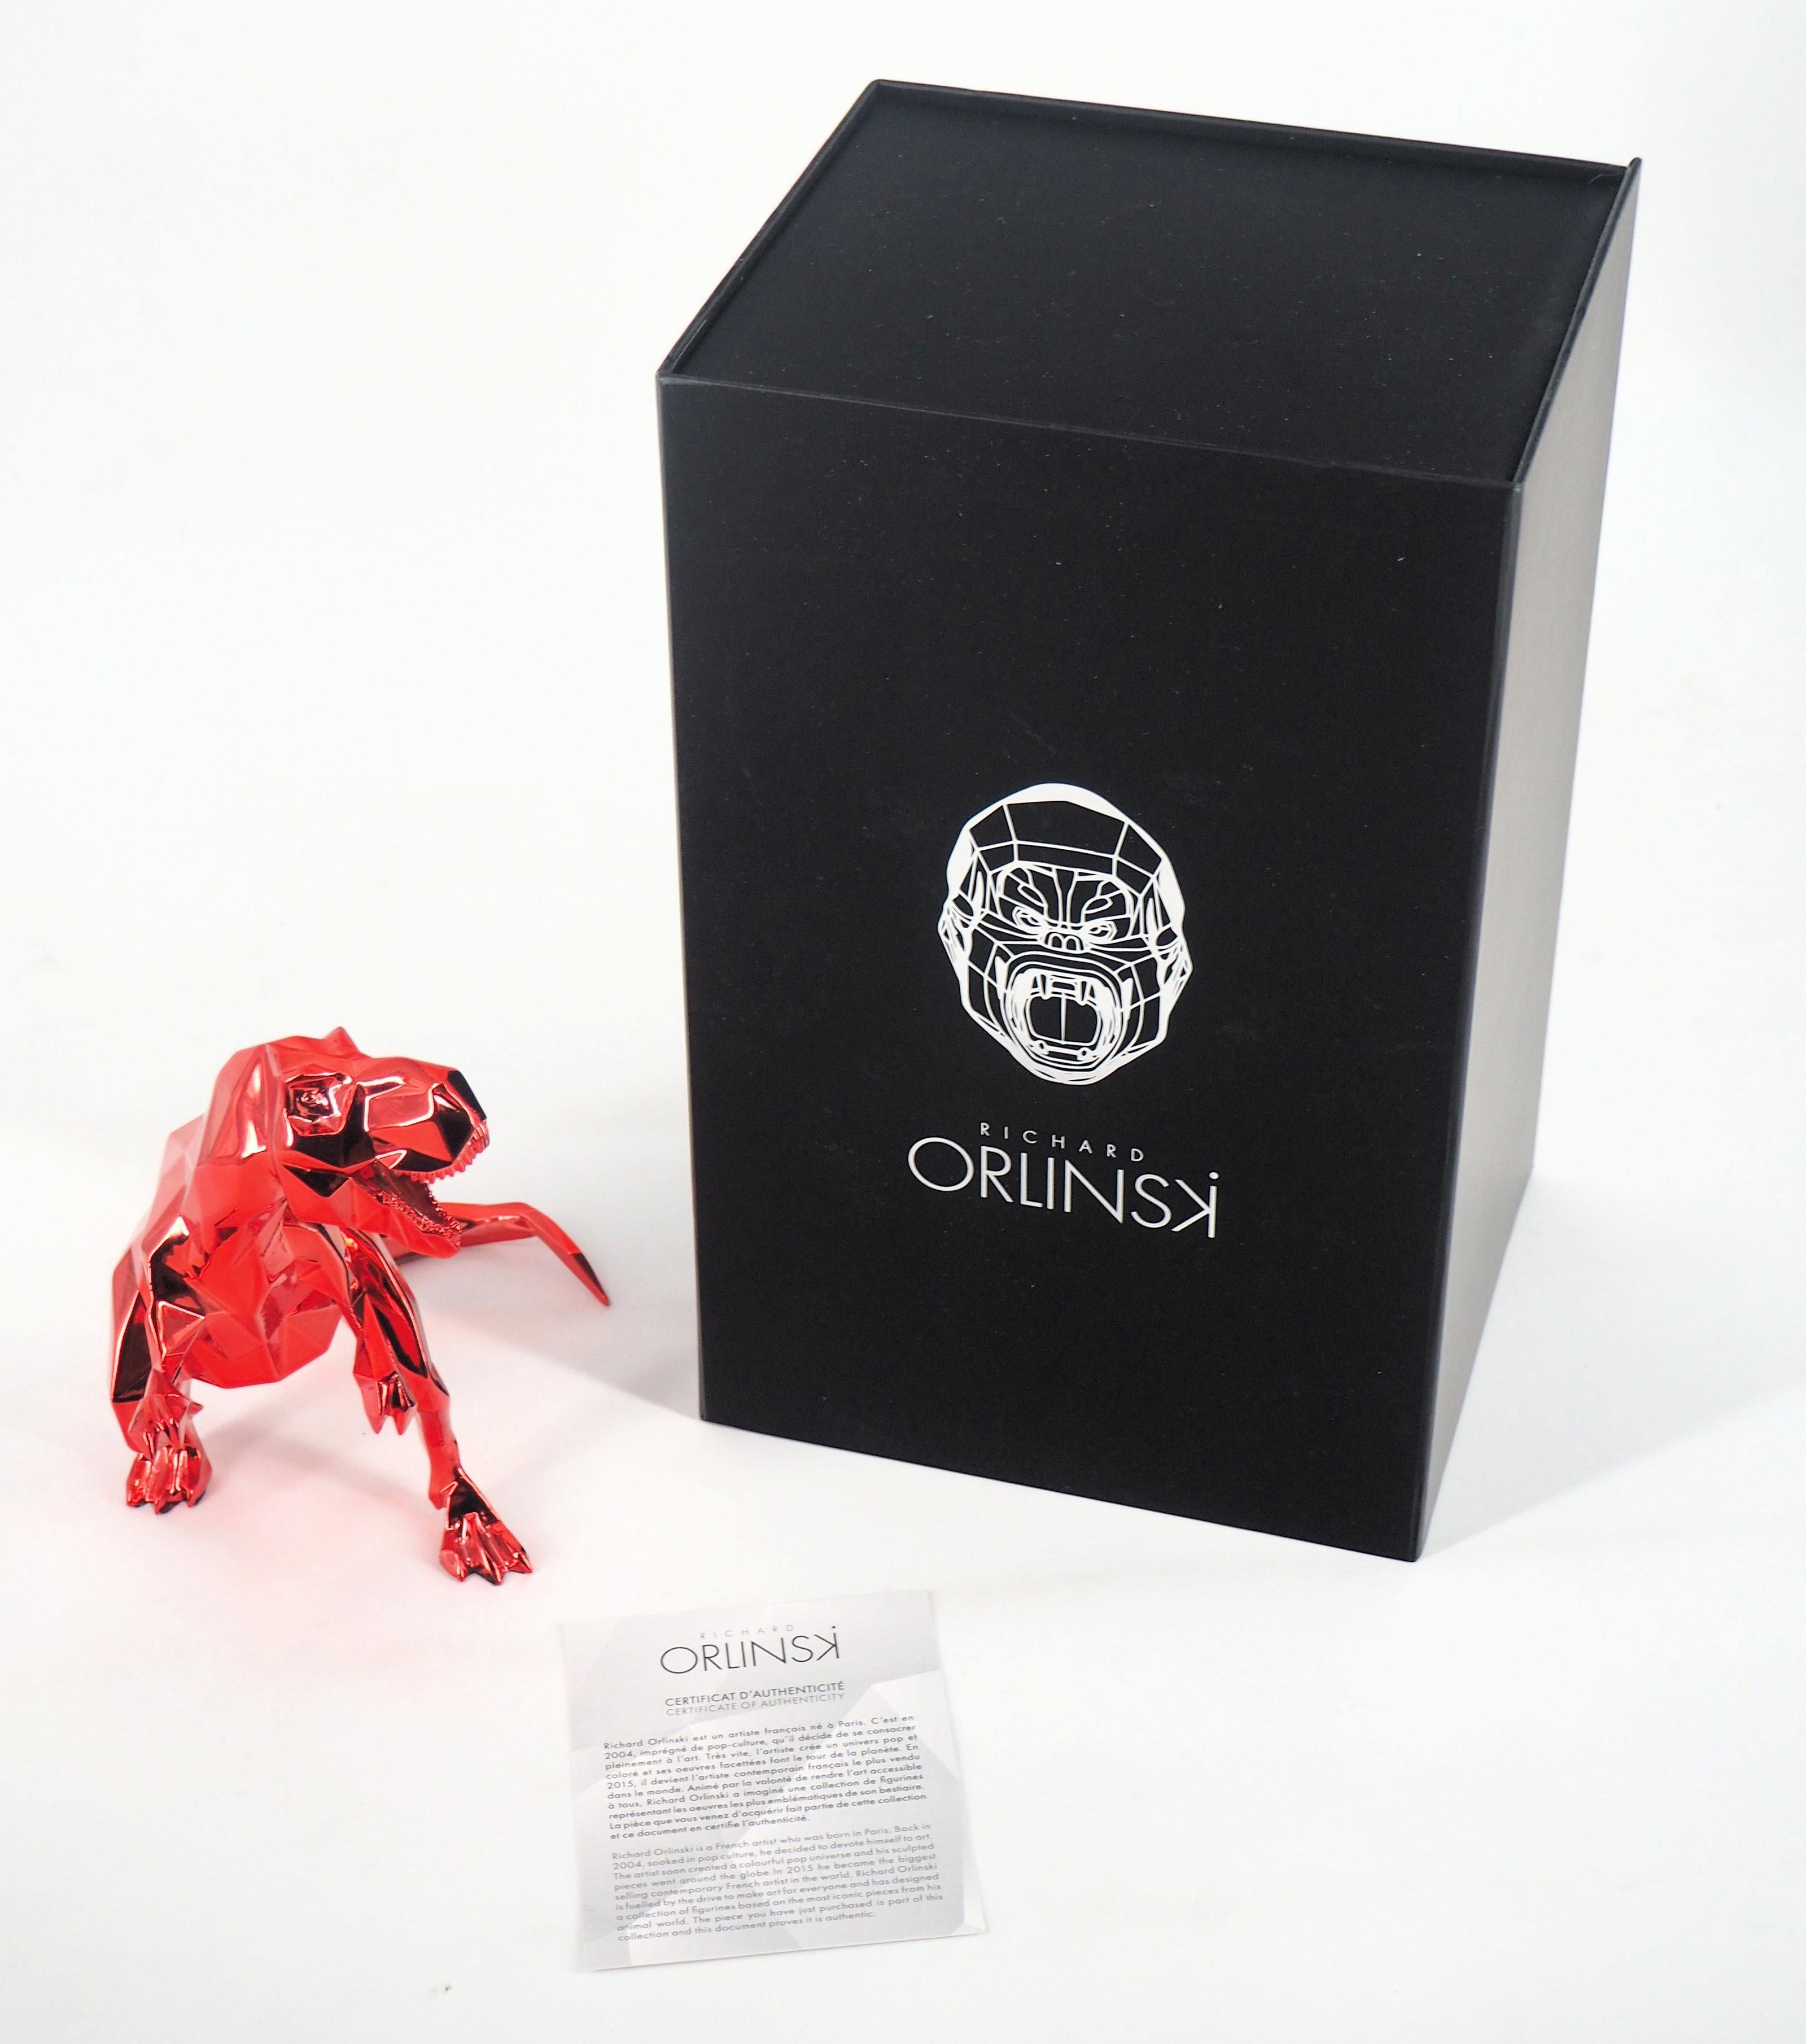 T-Rex (Red Edition) - Sculpture in original box with artist certificate - Gray Figurative Sculpture by Richard Orlinski